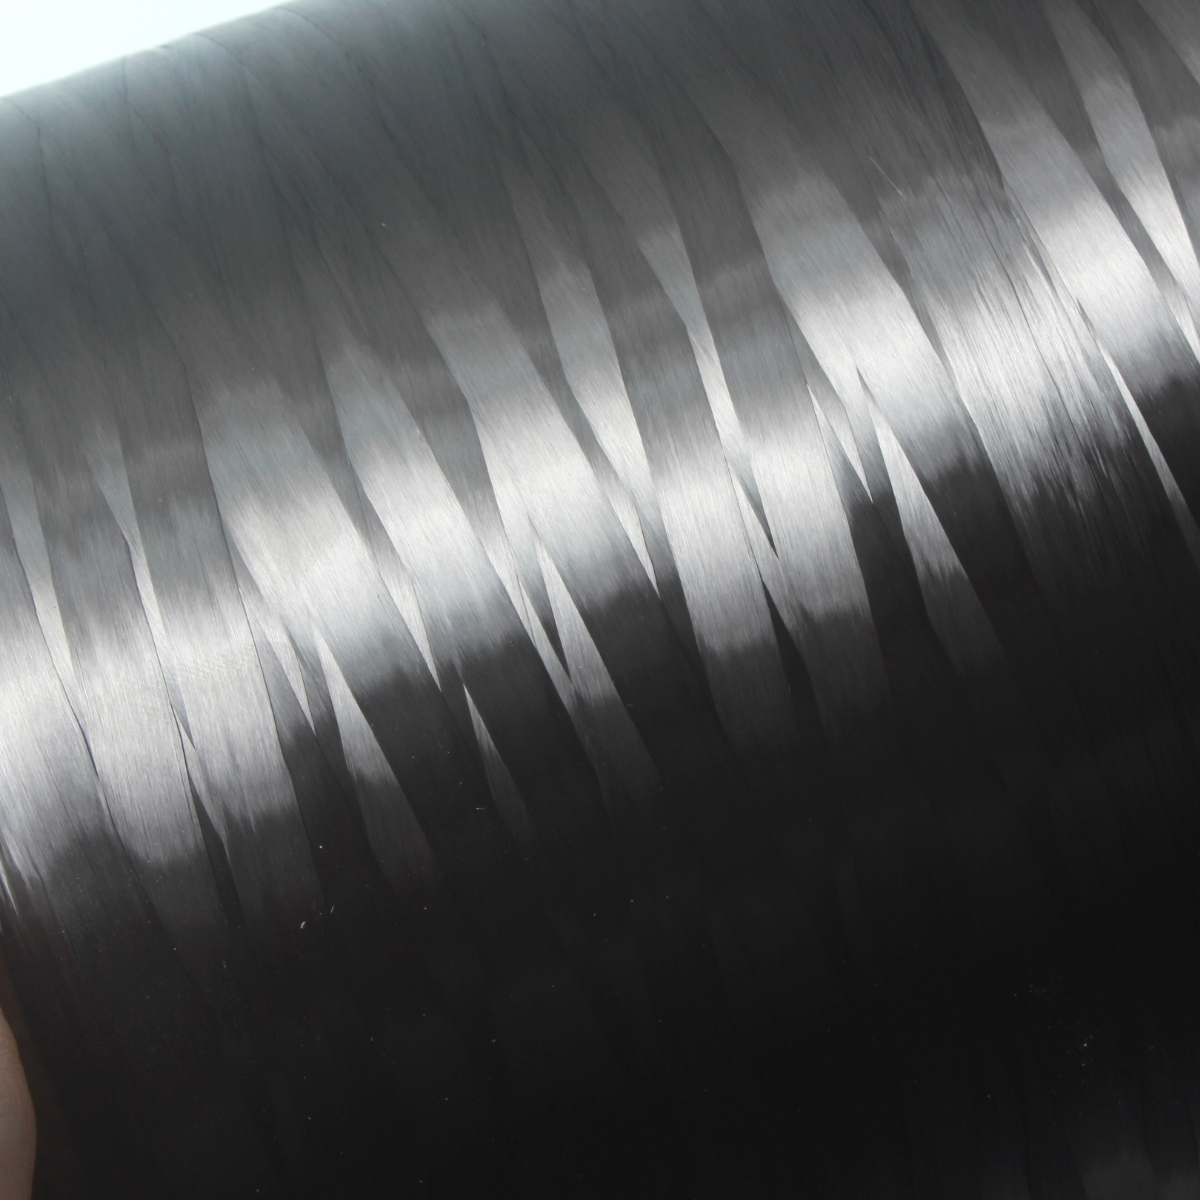 Imported High Quality 3K Carbon Fiber Filament Yarn